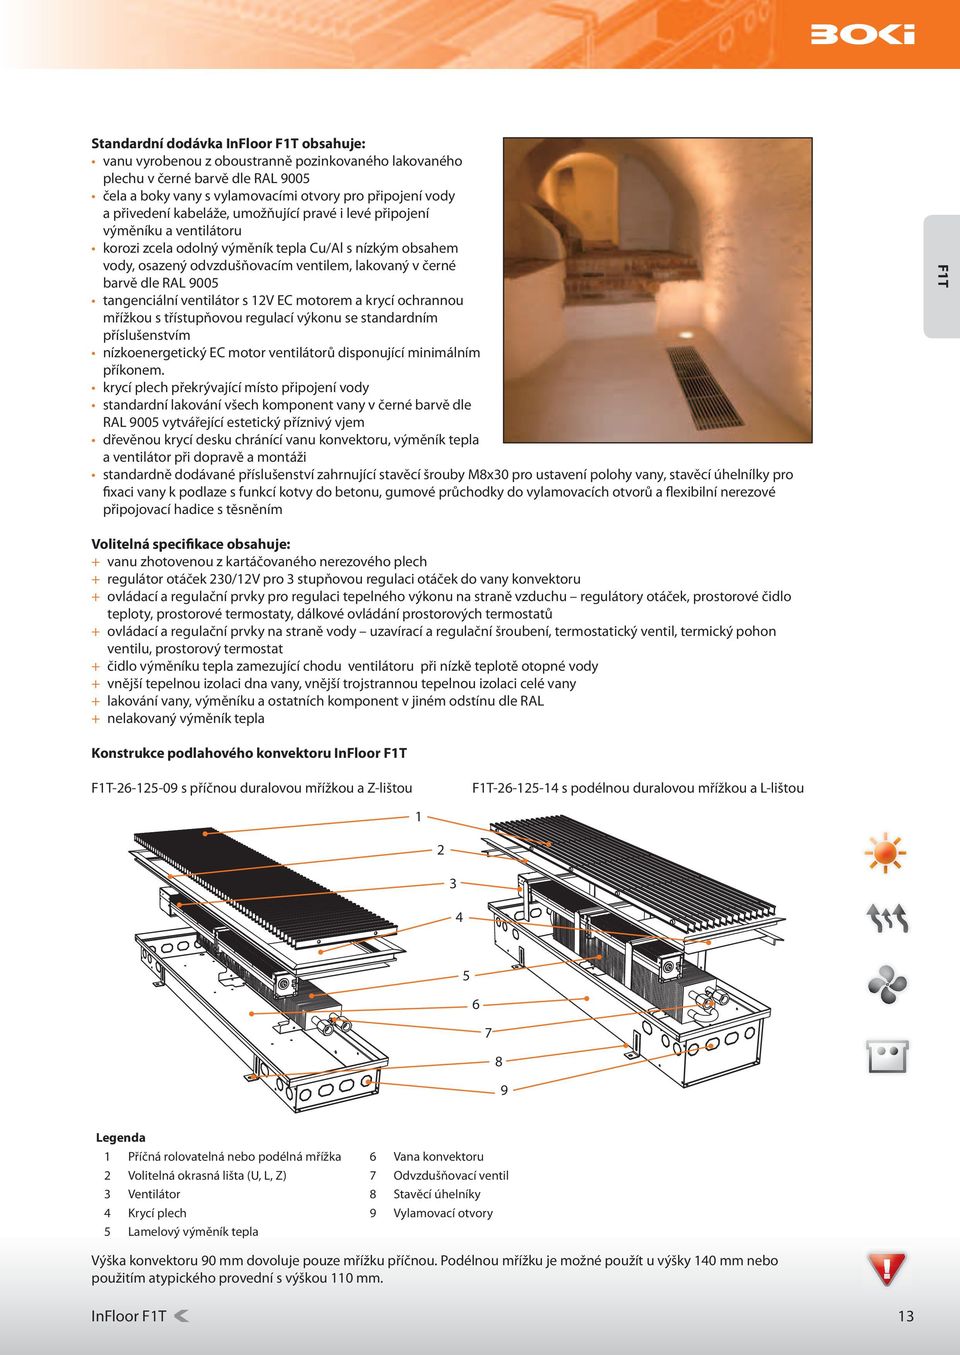 InFloor podlahové konvektory - PDF Free Download